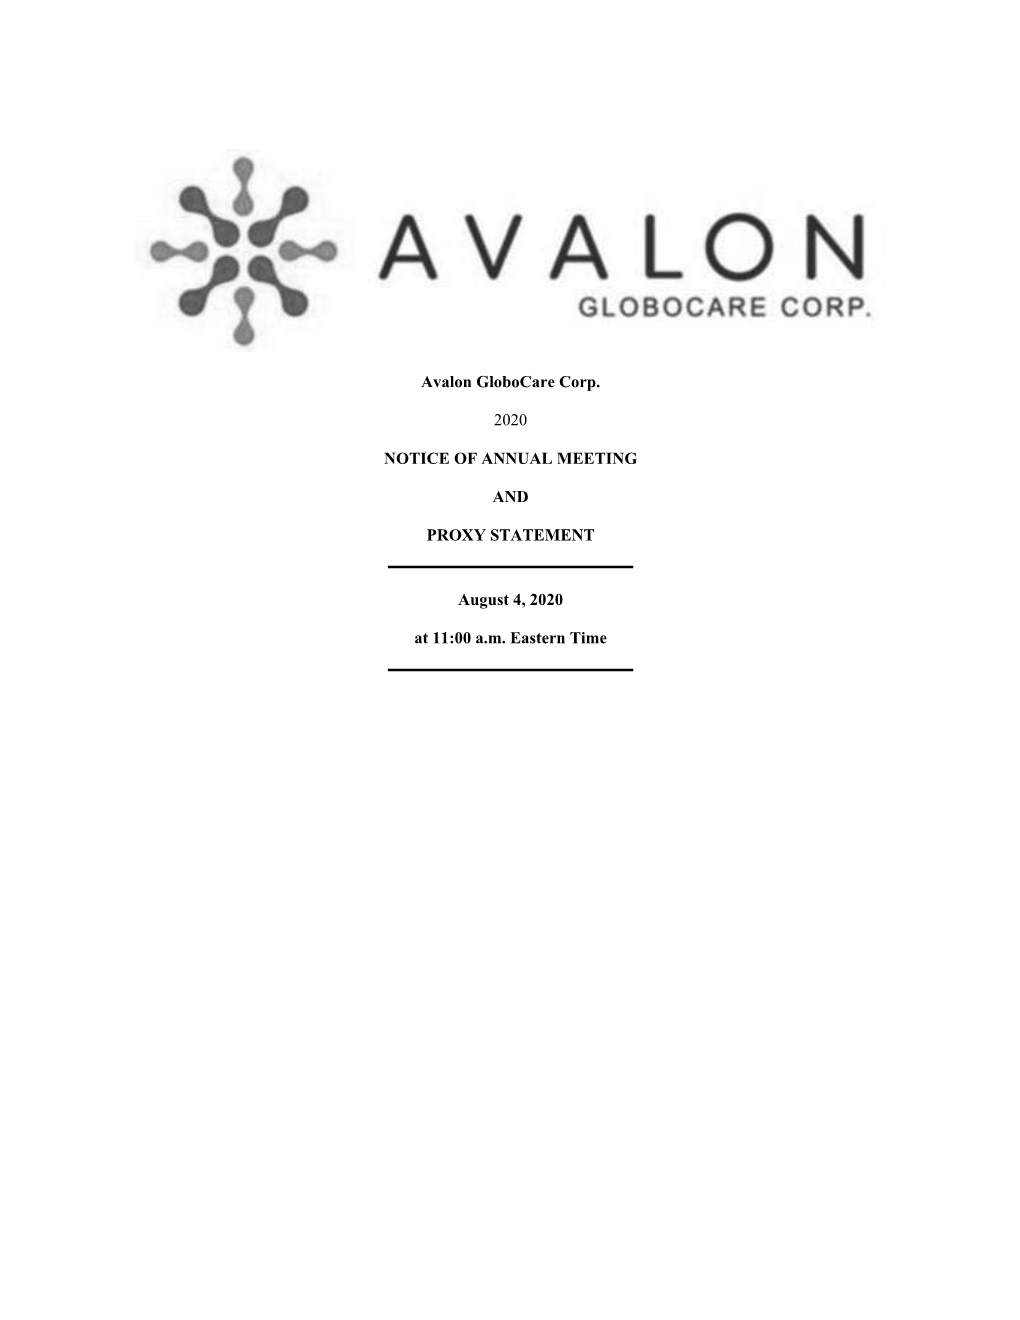 Avalon Globocare Corp. 2020 NOTICE of ANNUAL